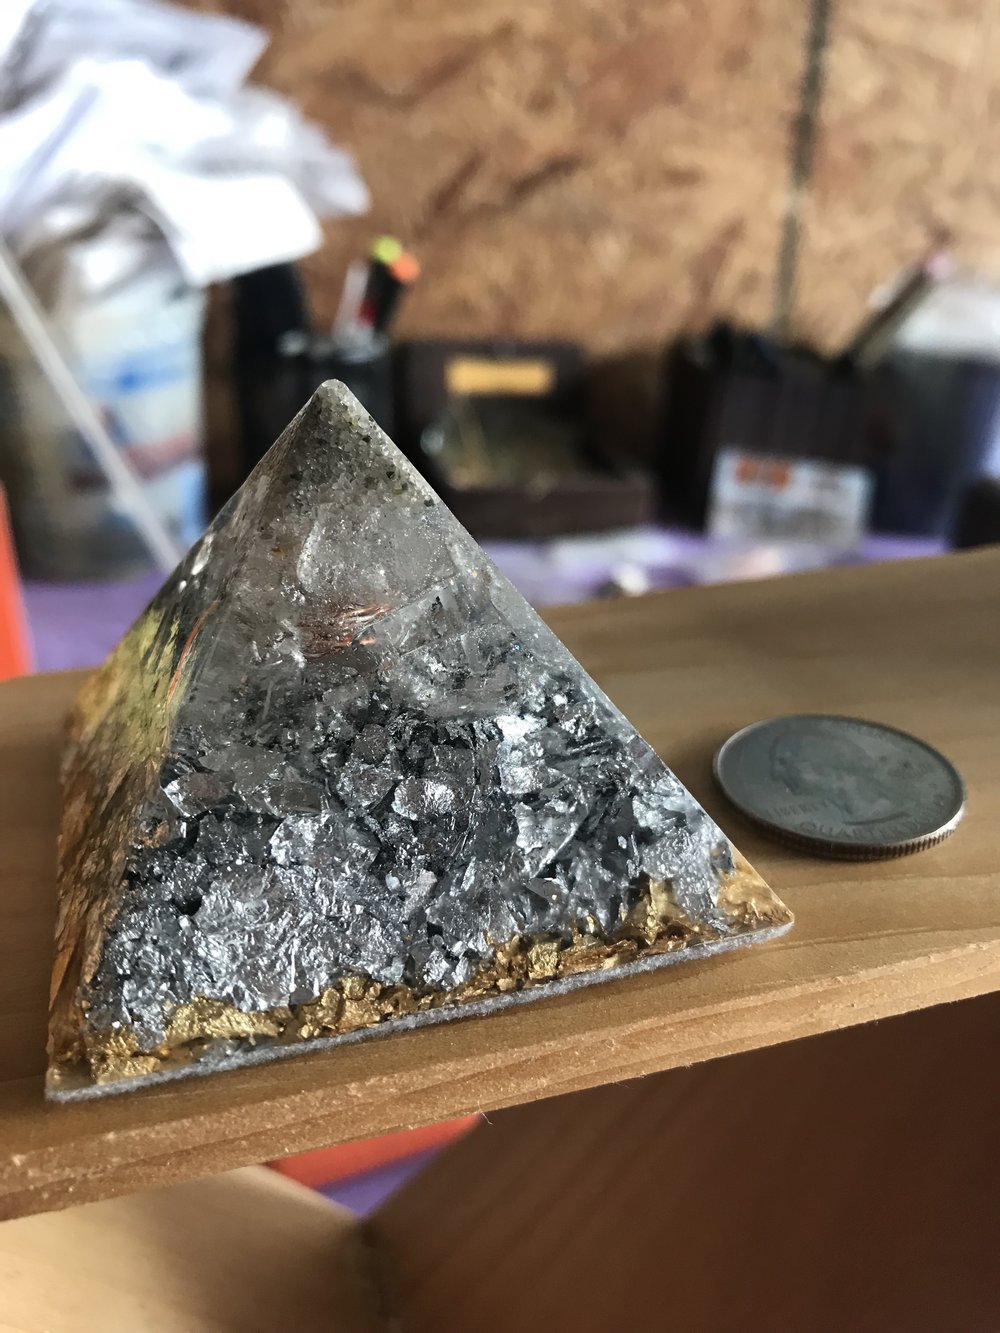 GOLD - SILVER - DIAMOND ORGONE, ORGONITE PYRAMID